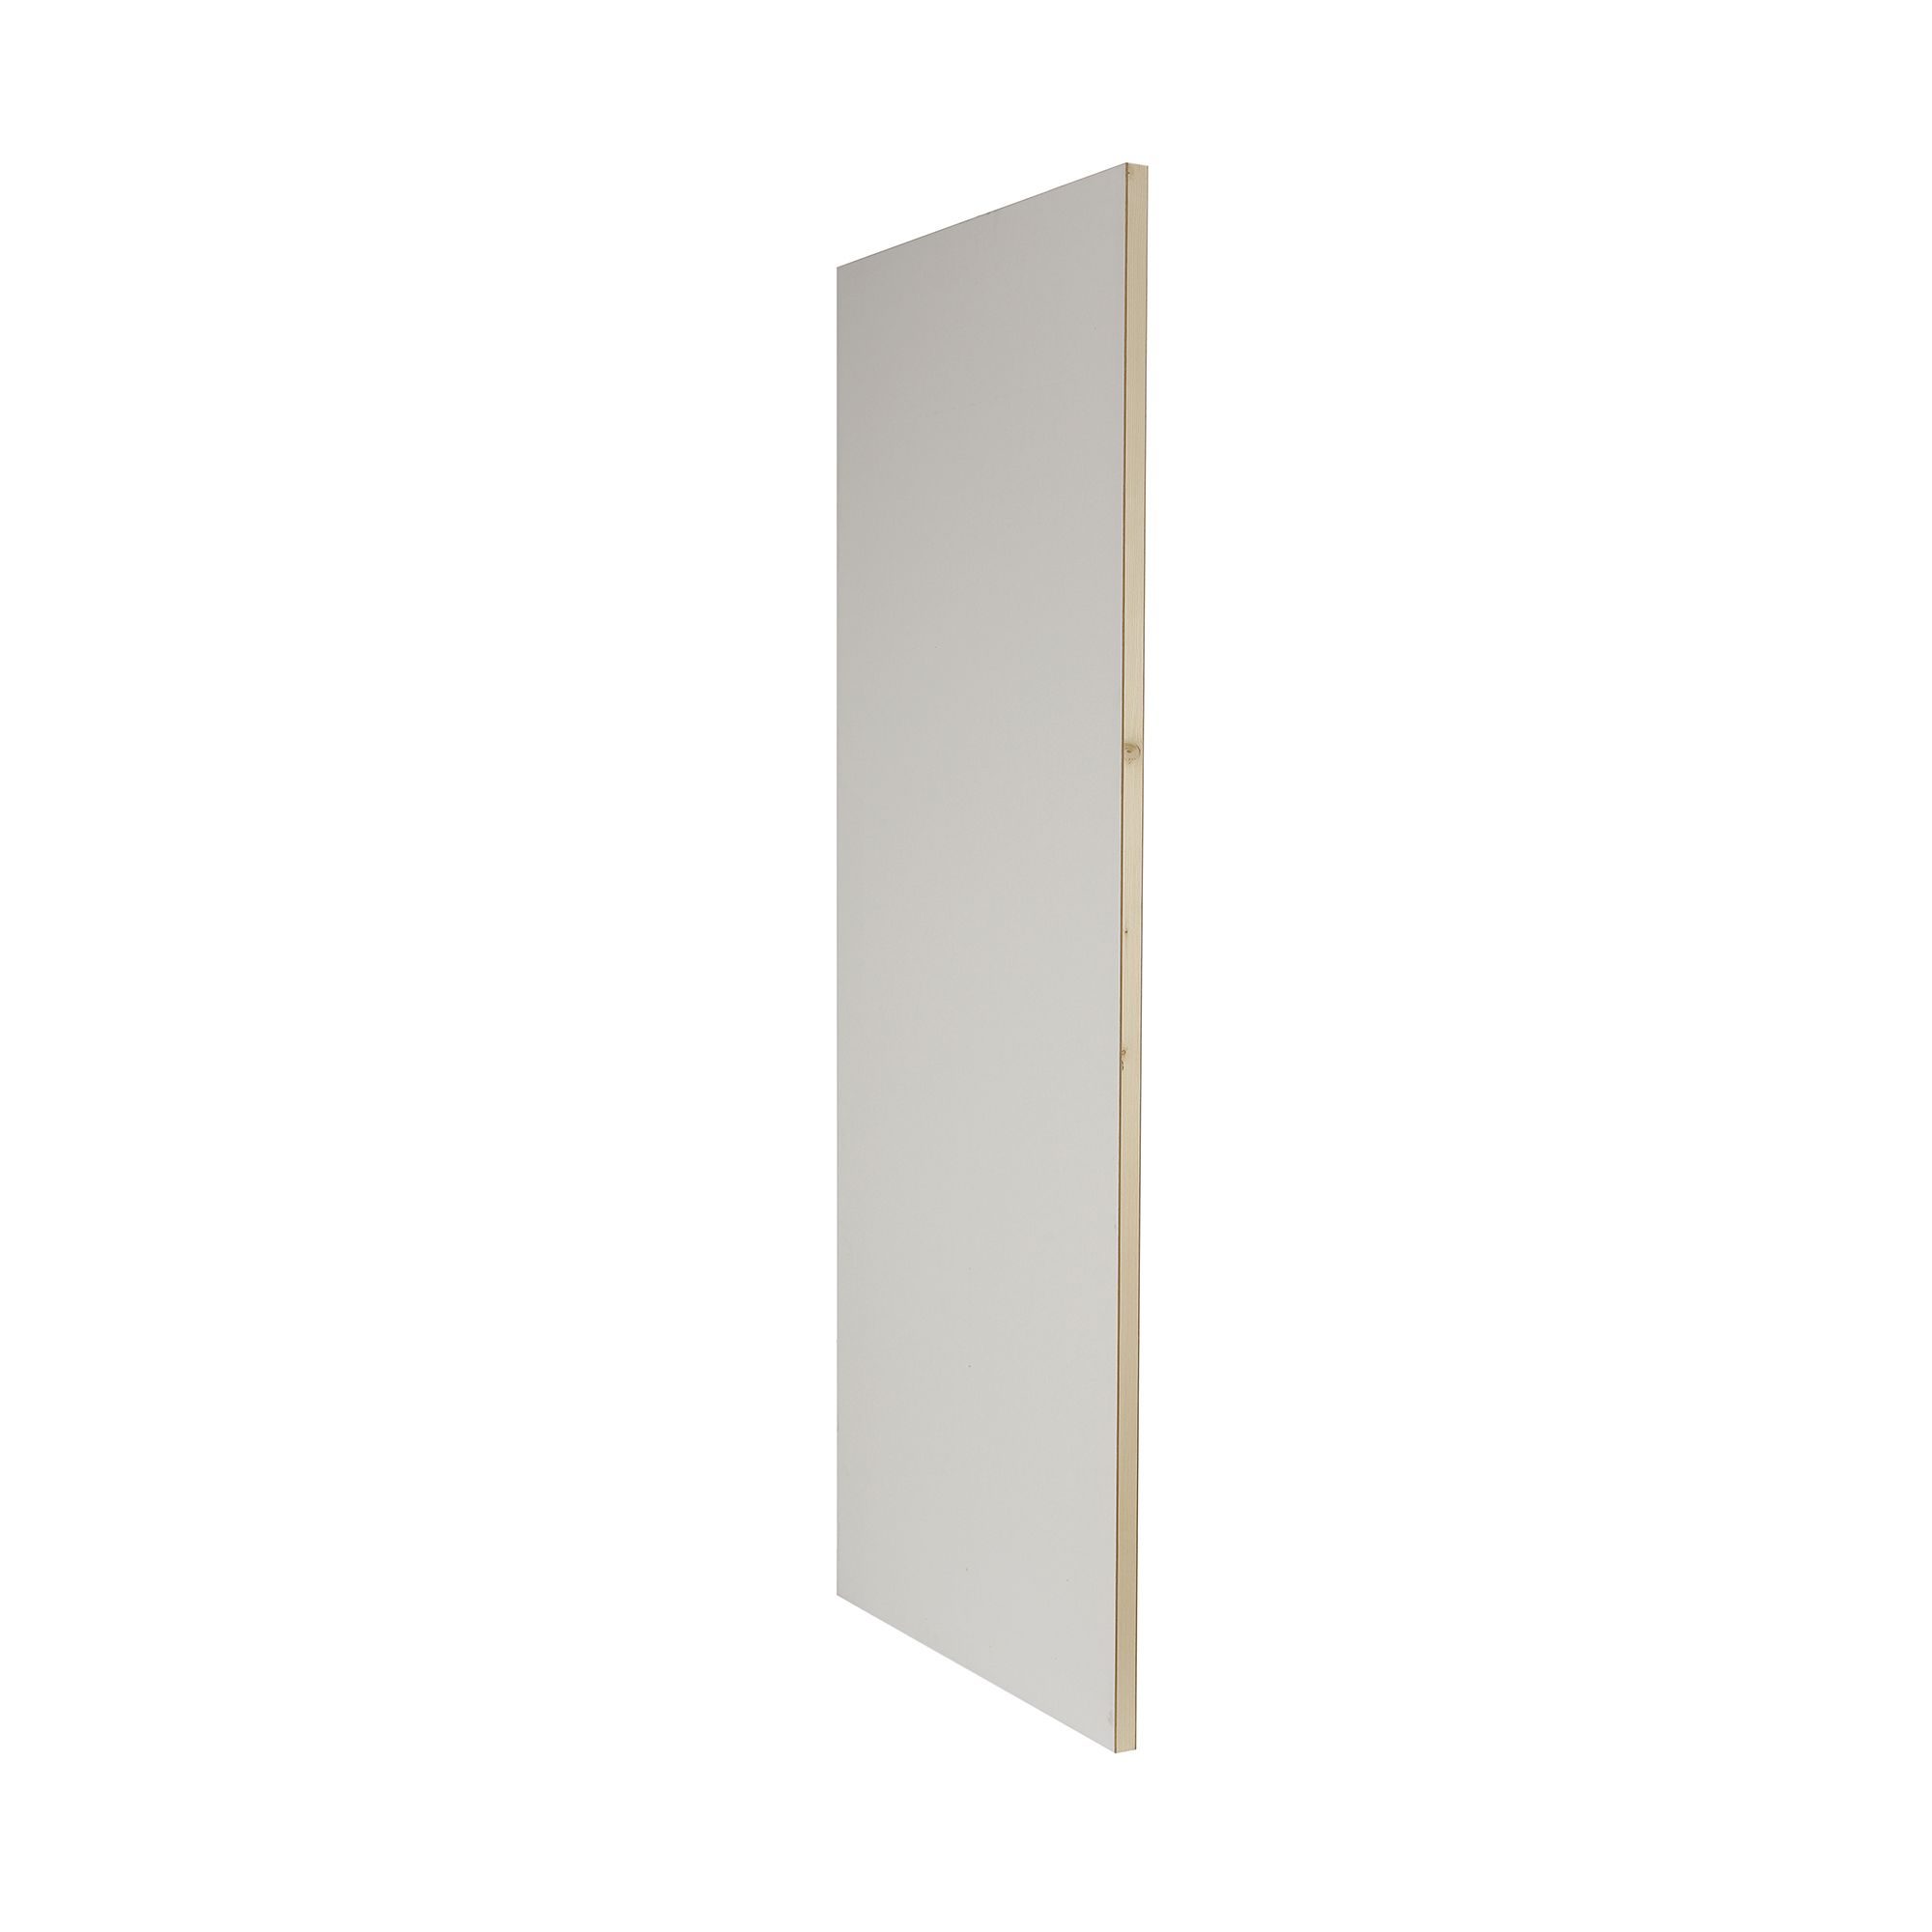 Jeld-Wen Flush White Internal Fire door, (H)1981mm (W)762mm (T)44mm